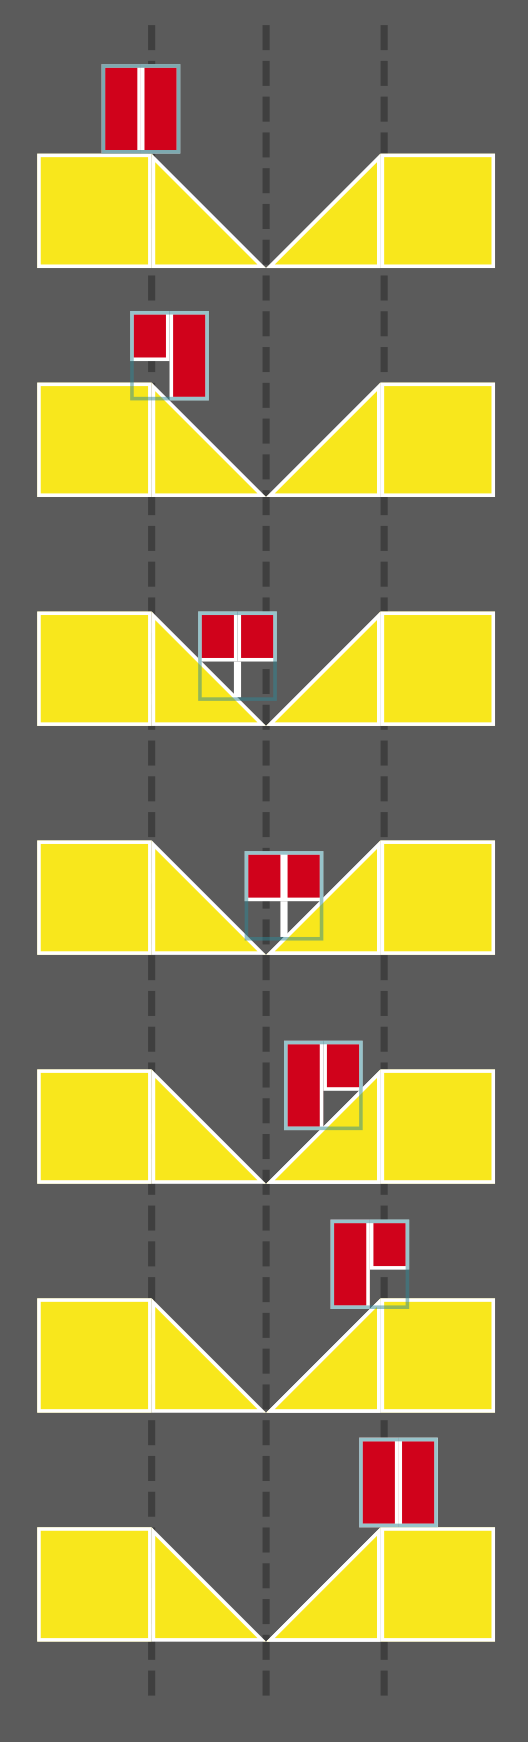 Adjusting Bounding Box Slope Collision